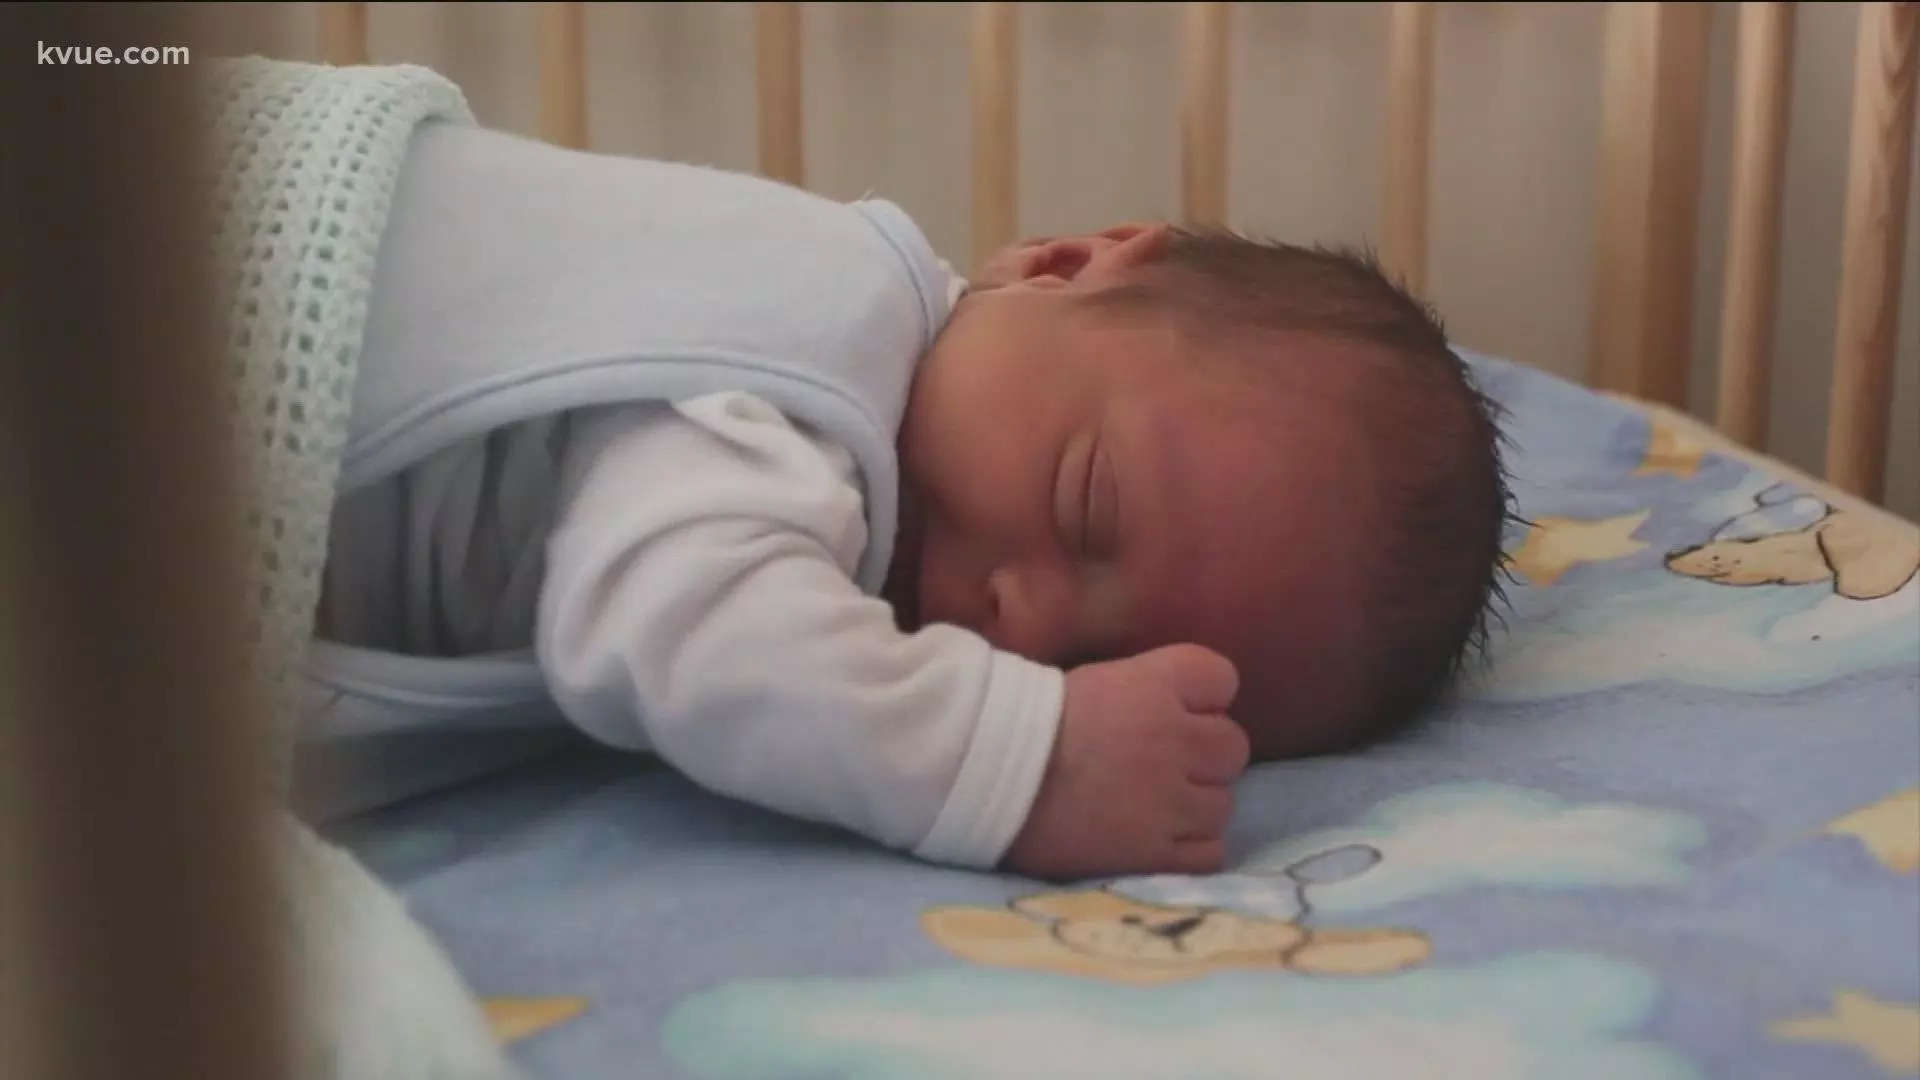 Australian researchers find cause behind sudden infant death